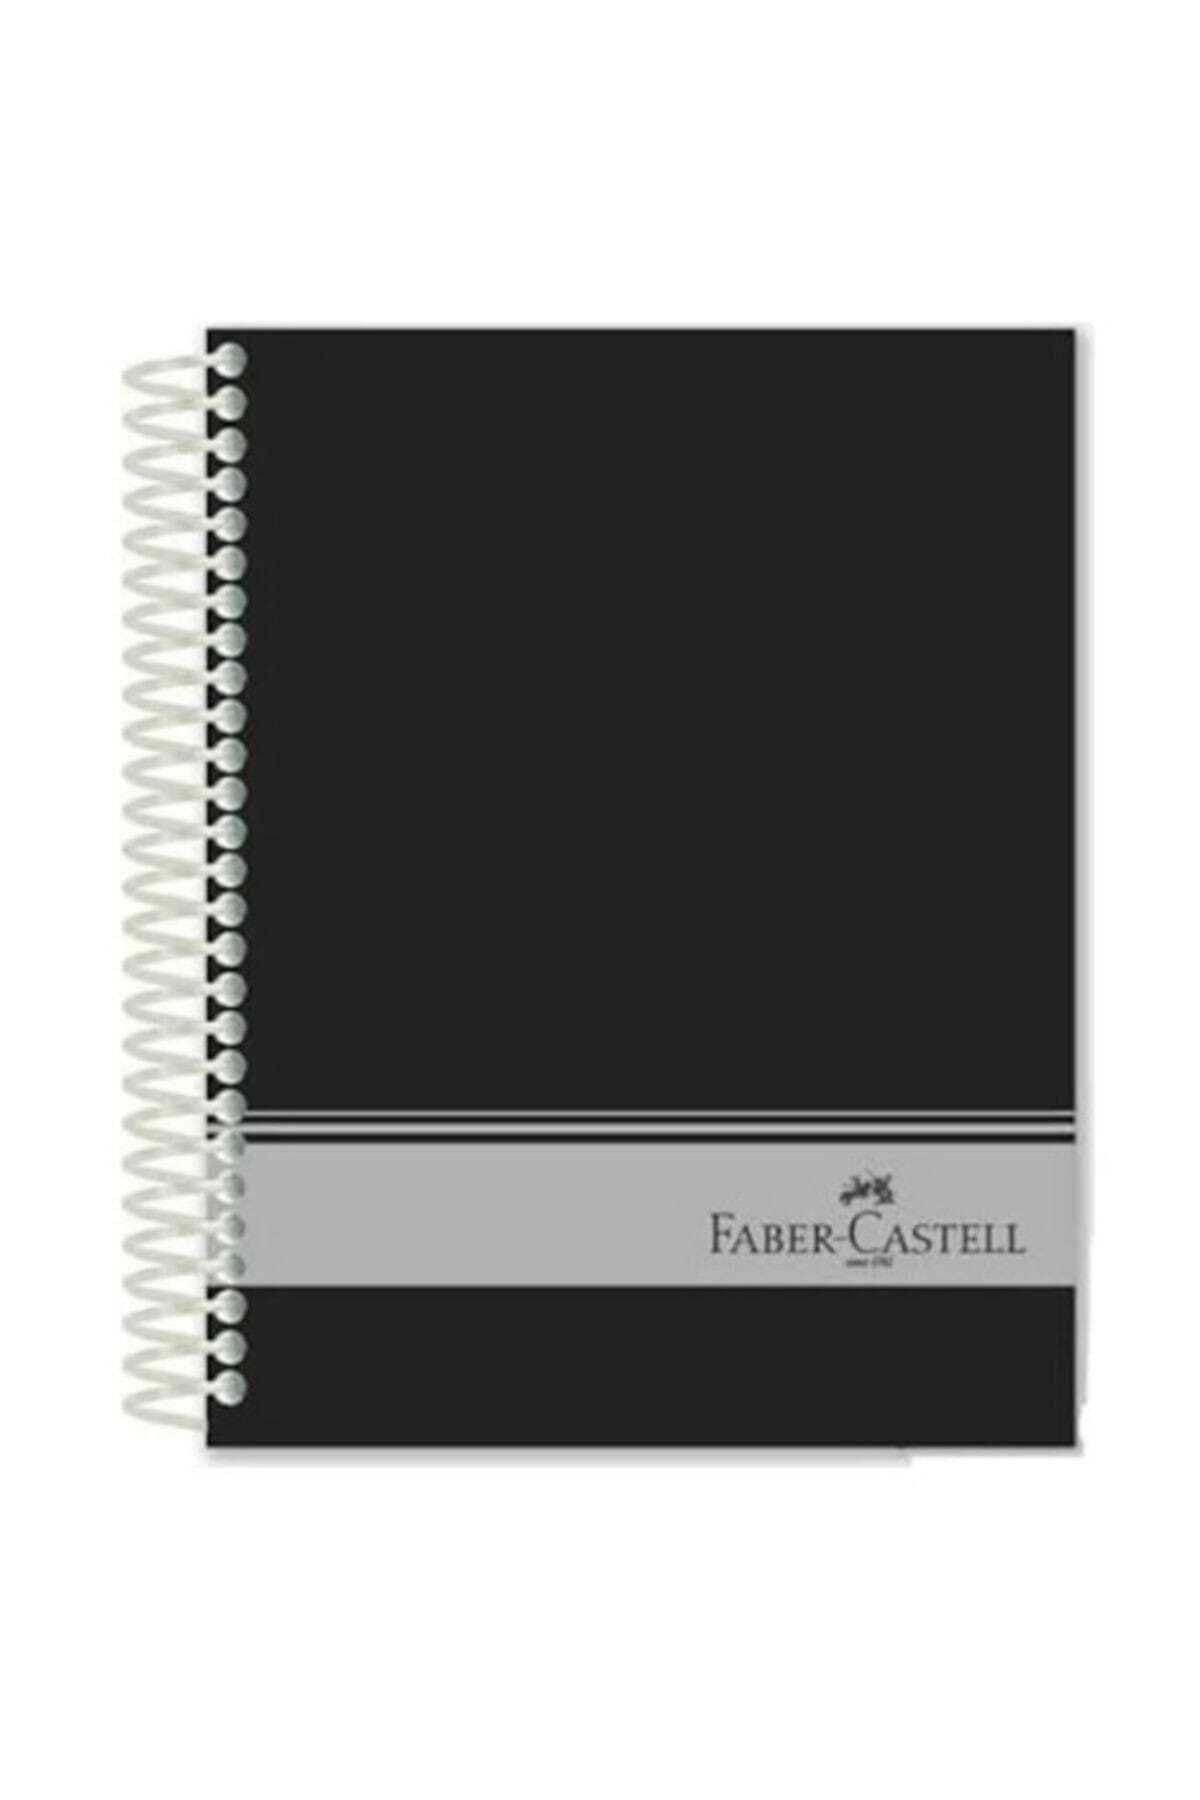 Faber Castell Faber 3+1 Sert Kapak Defter Siyah 120 Yp.400306 /